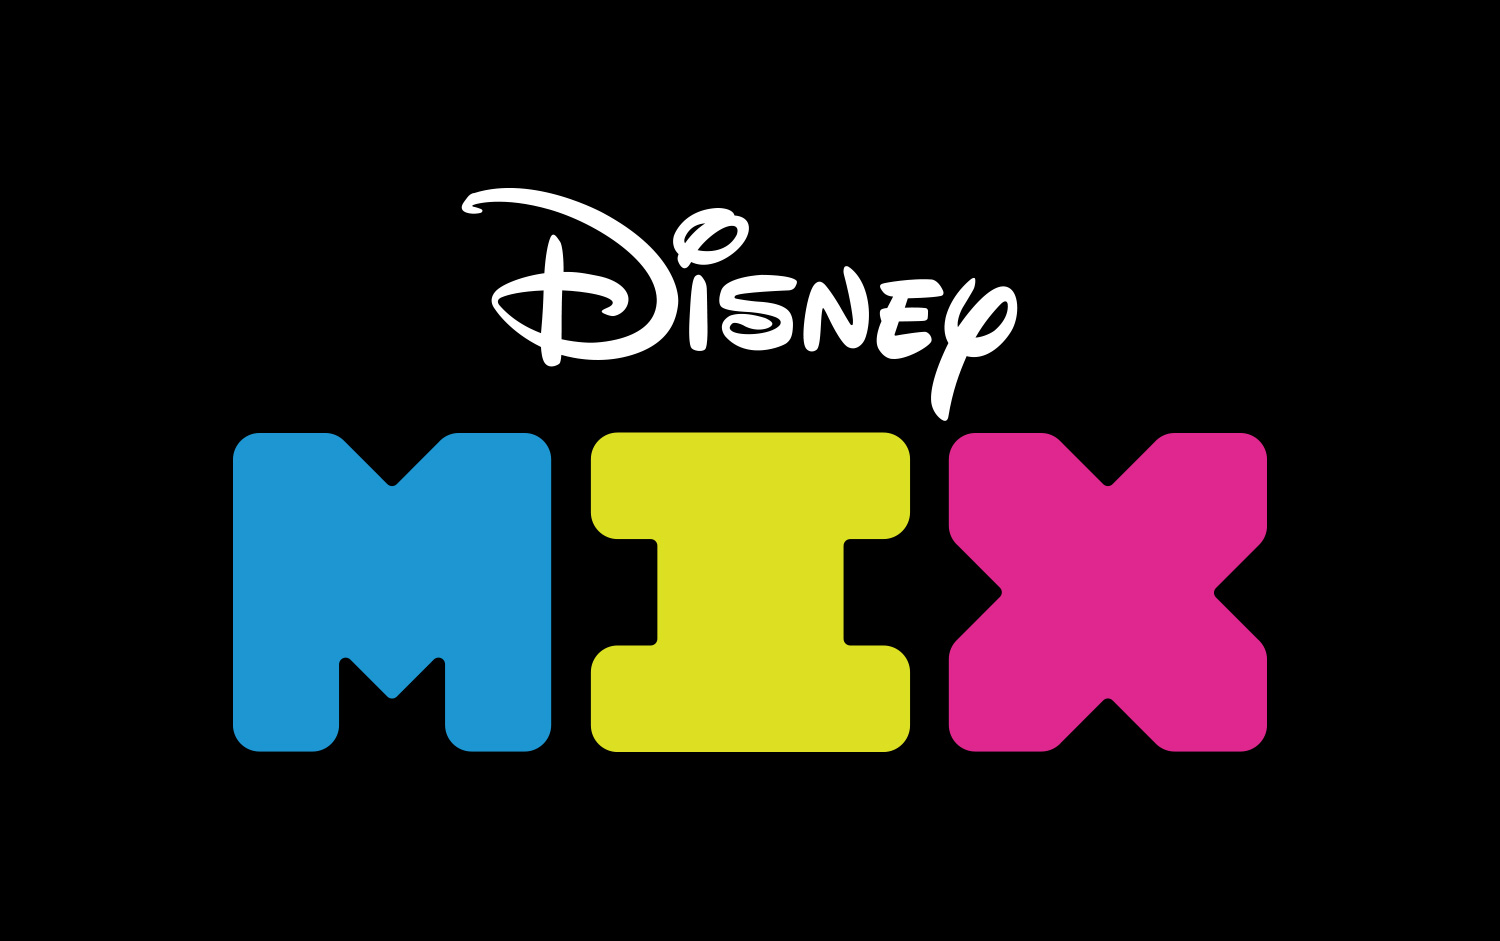 Disney Mix Logo, Typography, Matthijs Matt van Leeuwen, Kurt Munger, Justin Ross Tolentino, Interbrand